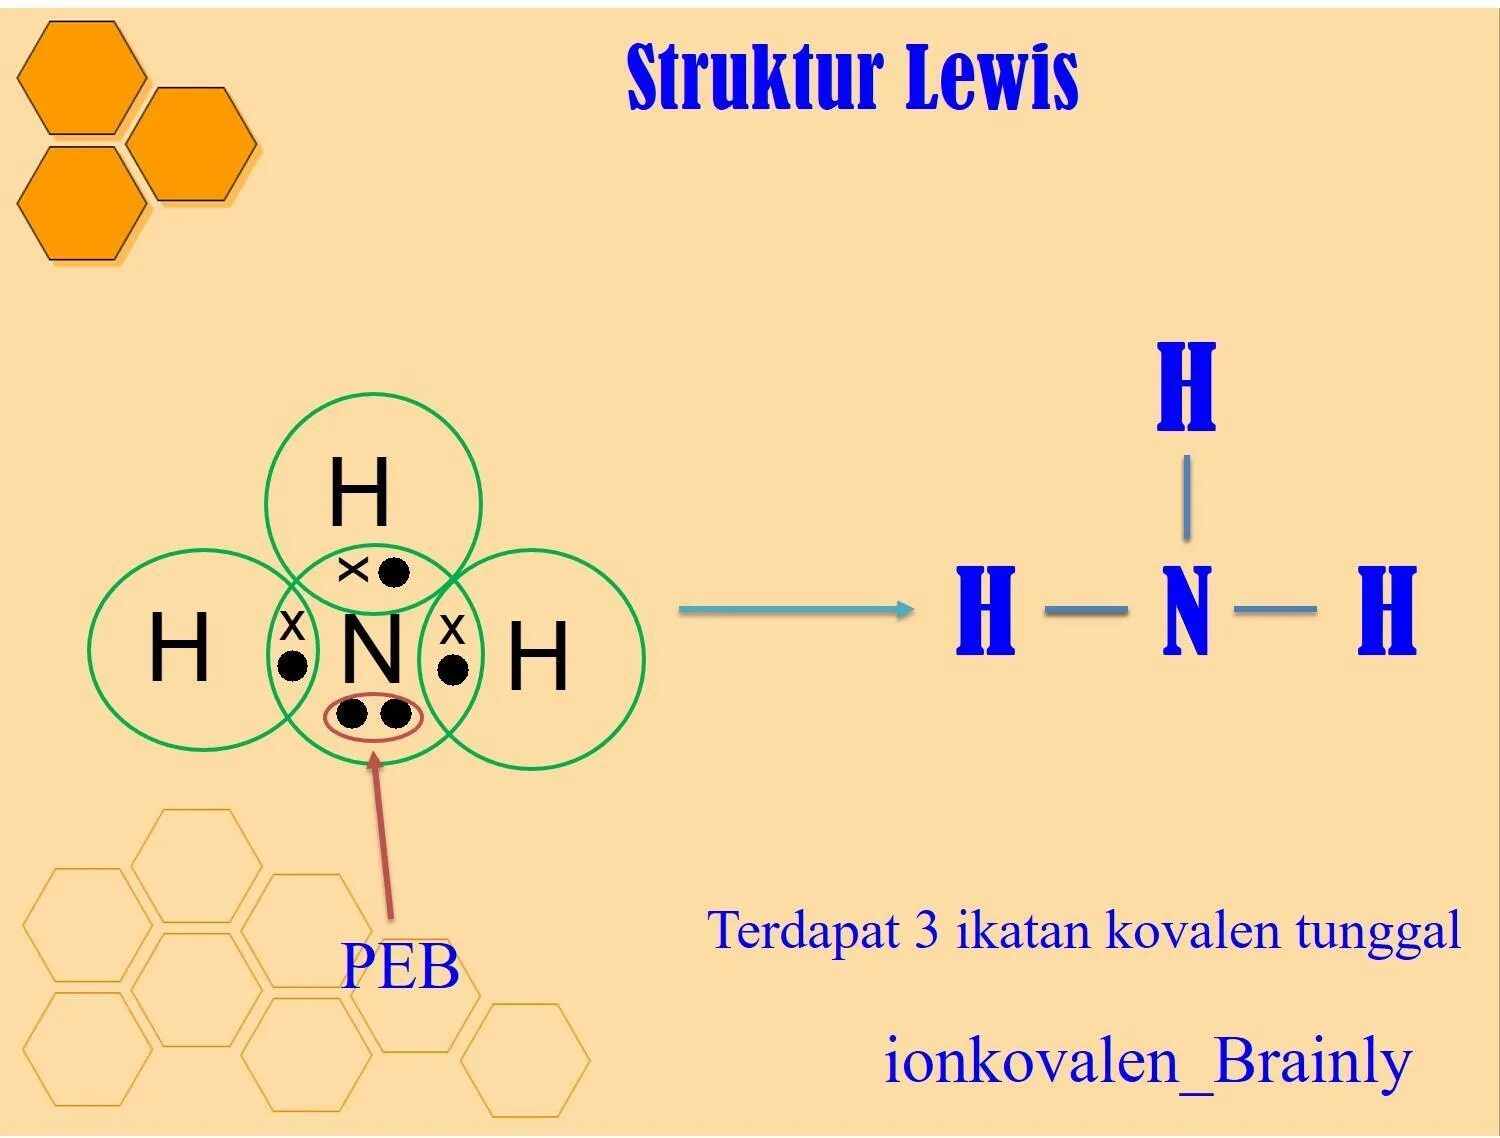 Nh 3 связь. Механизм образования молекул nh3. Bcl3 связь. Bcl3 гибридизация. Схема образования молекулы nh3.